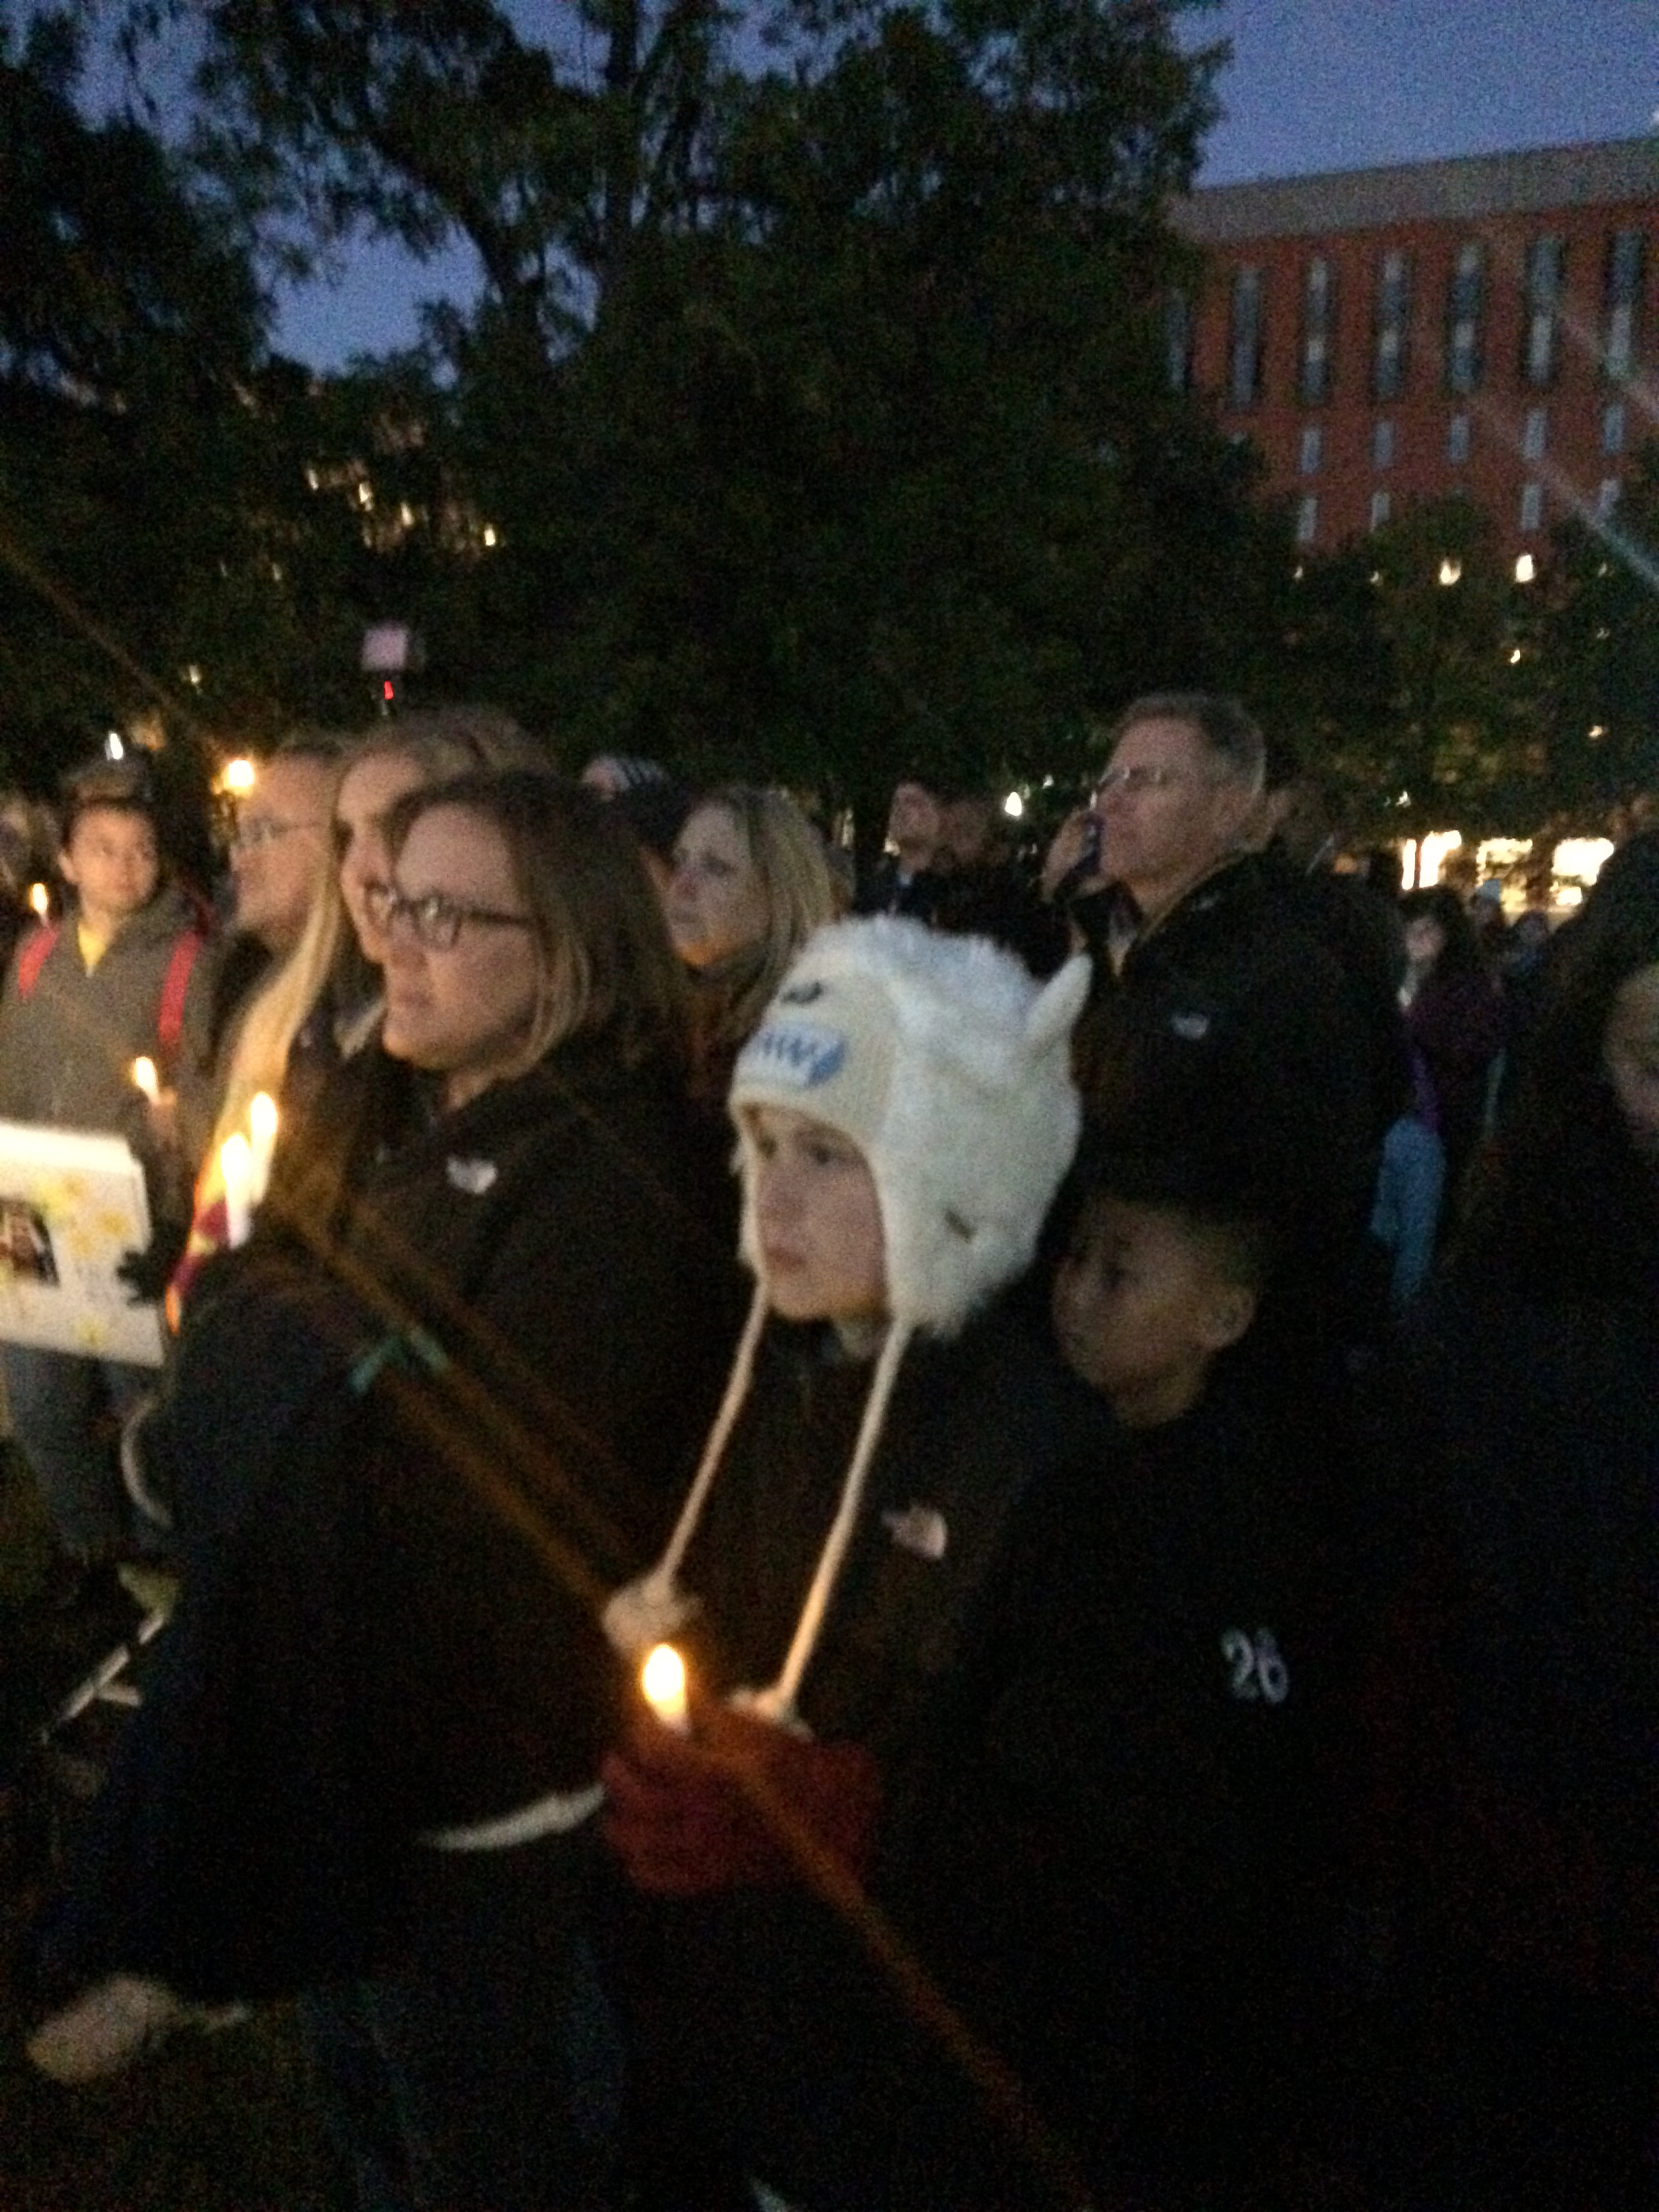 Photos: Candlelight vigil offers hope for kids battling cancer